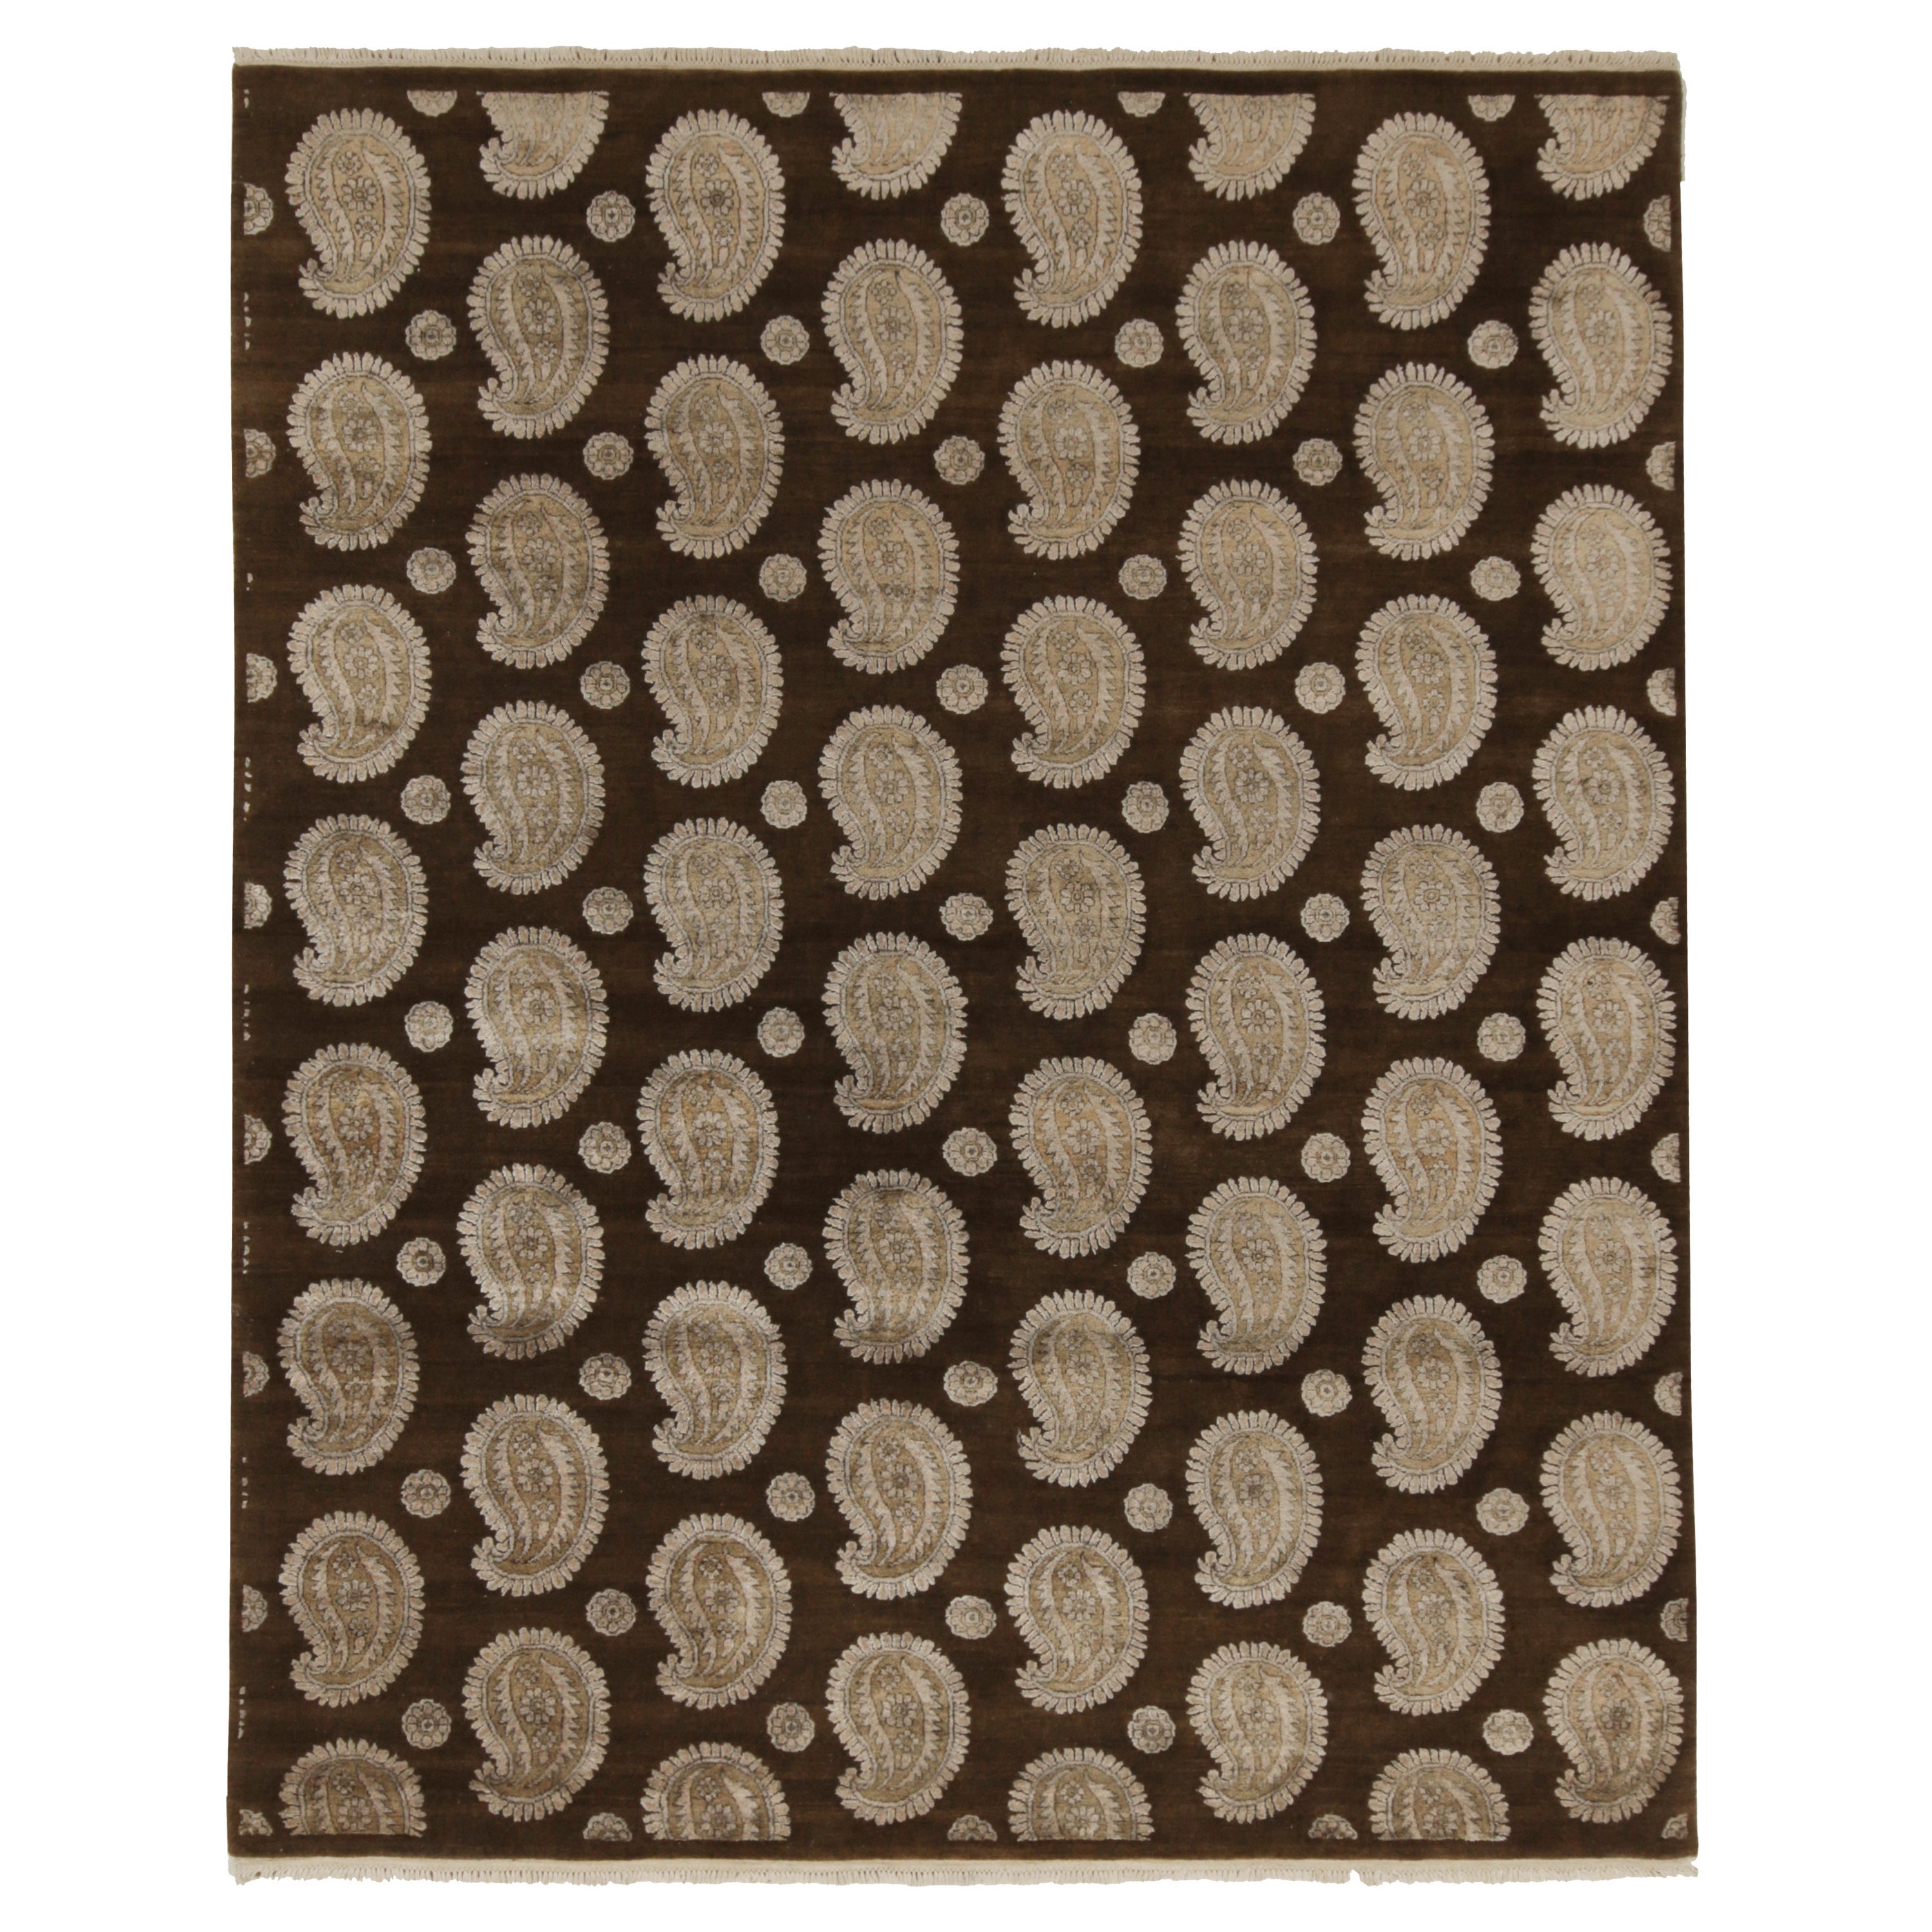 Rug & Kilim's Classic Style Teppich in Brown mit elfenbeinfarbenen Paisleymustern